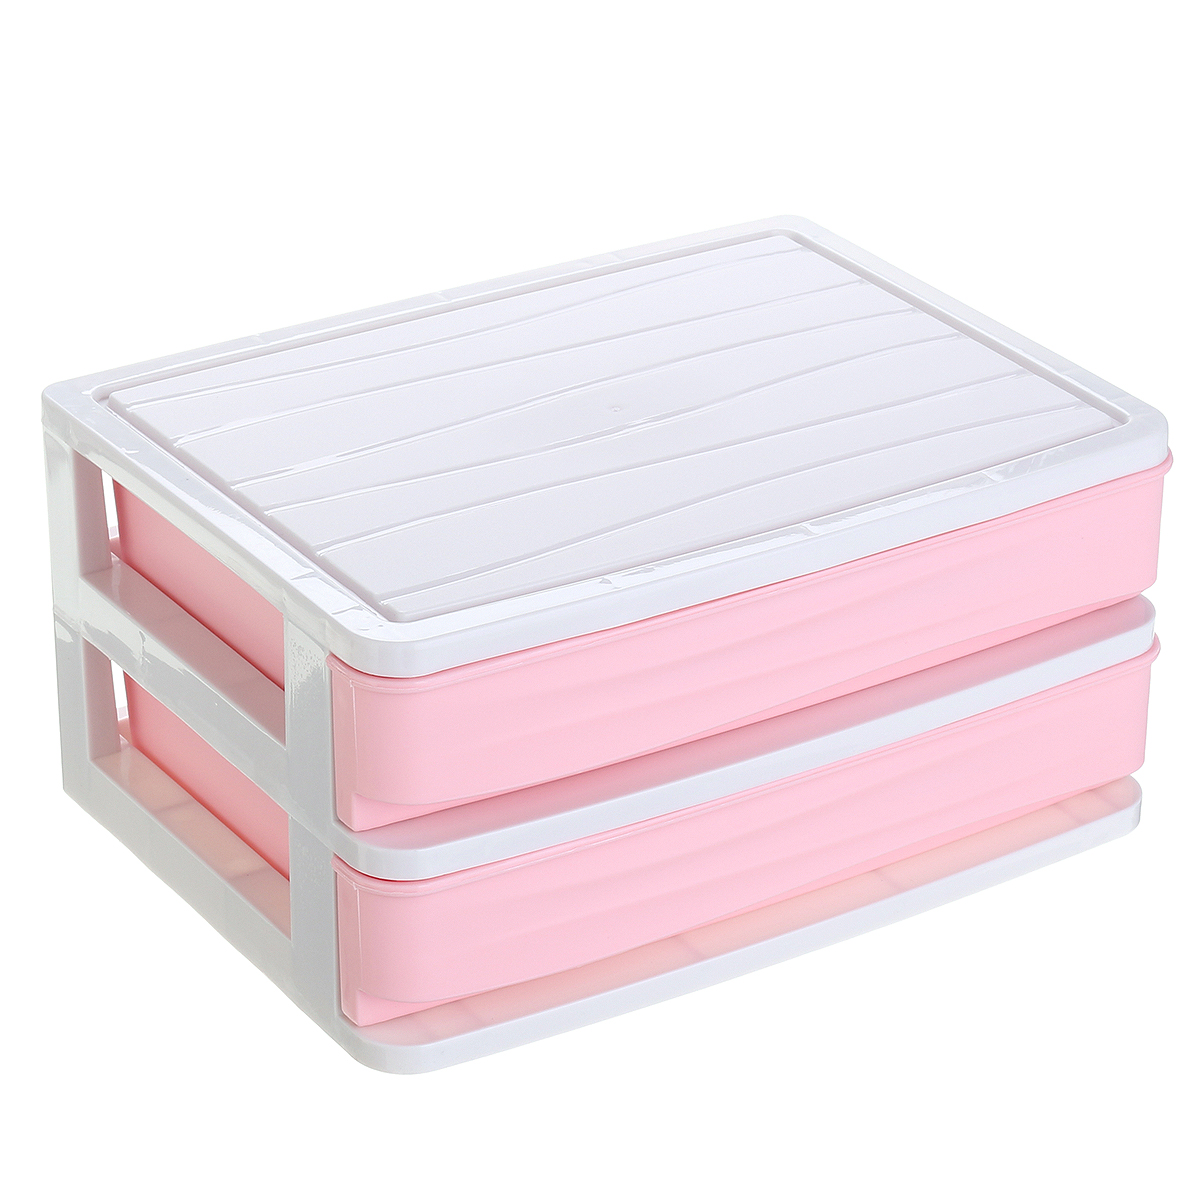 Plastic Cosmetic Box Drawer Makeup Organizer Makeup Desktop Storage Box Container Nail Casket Holder Jewelry Organizer Desktop Organizer—10